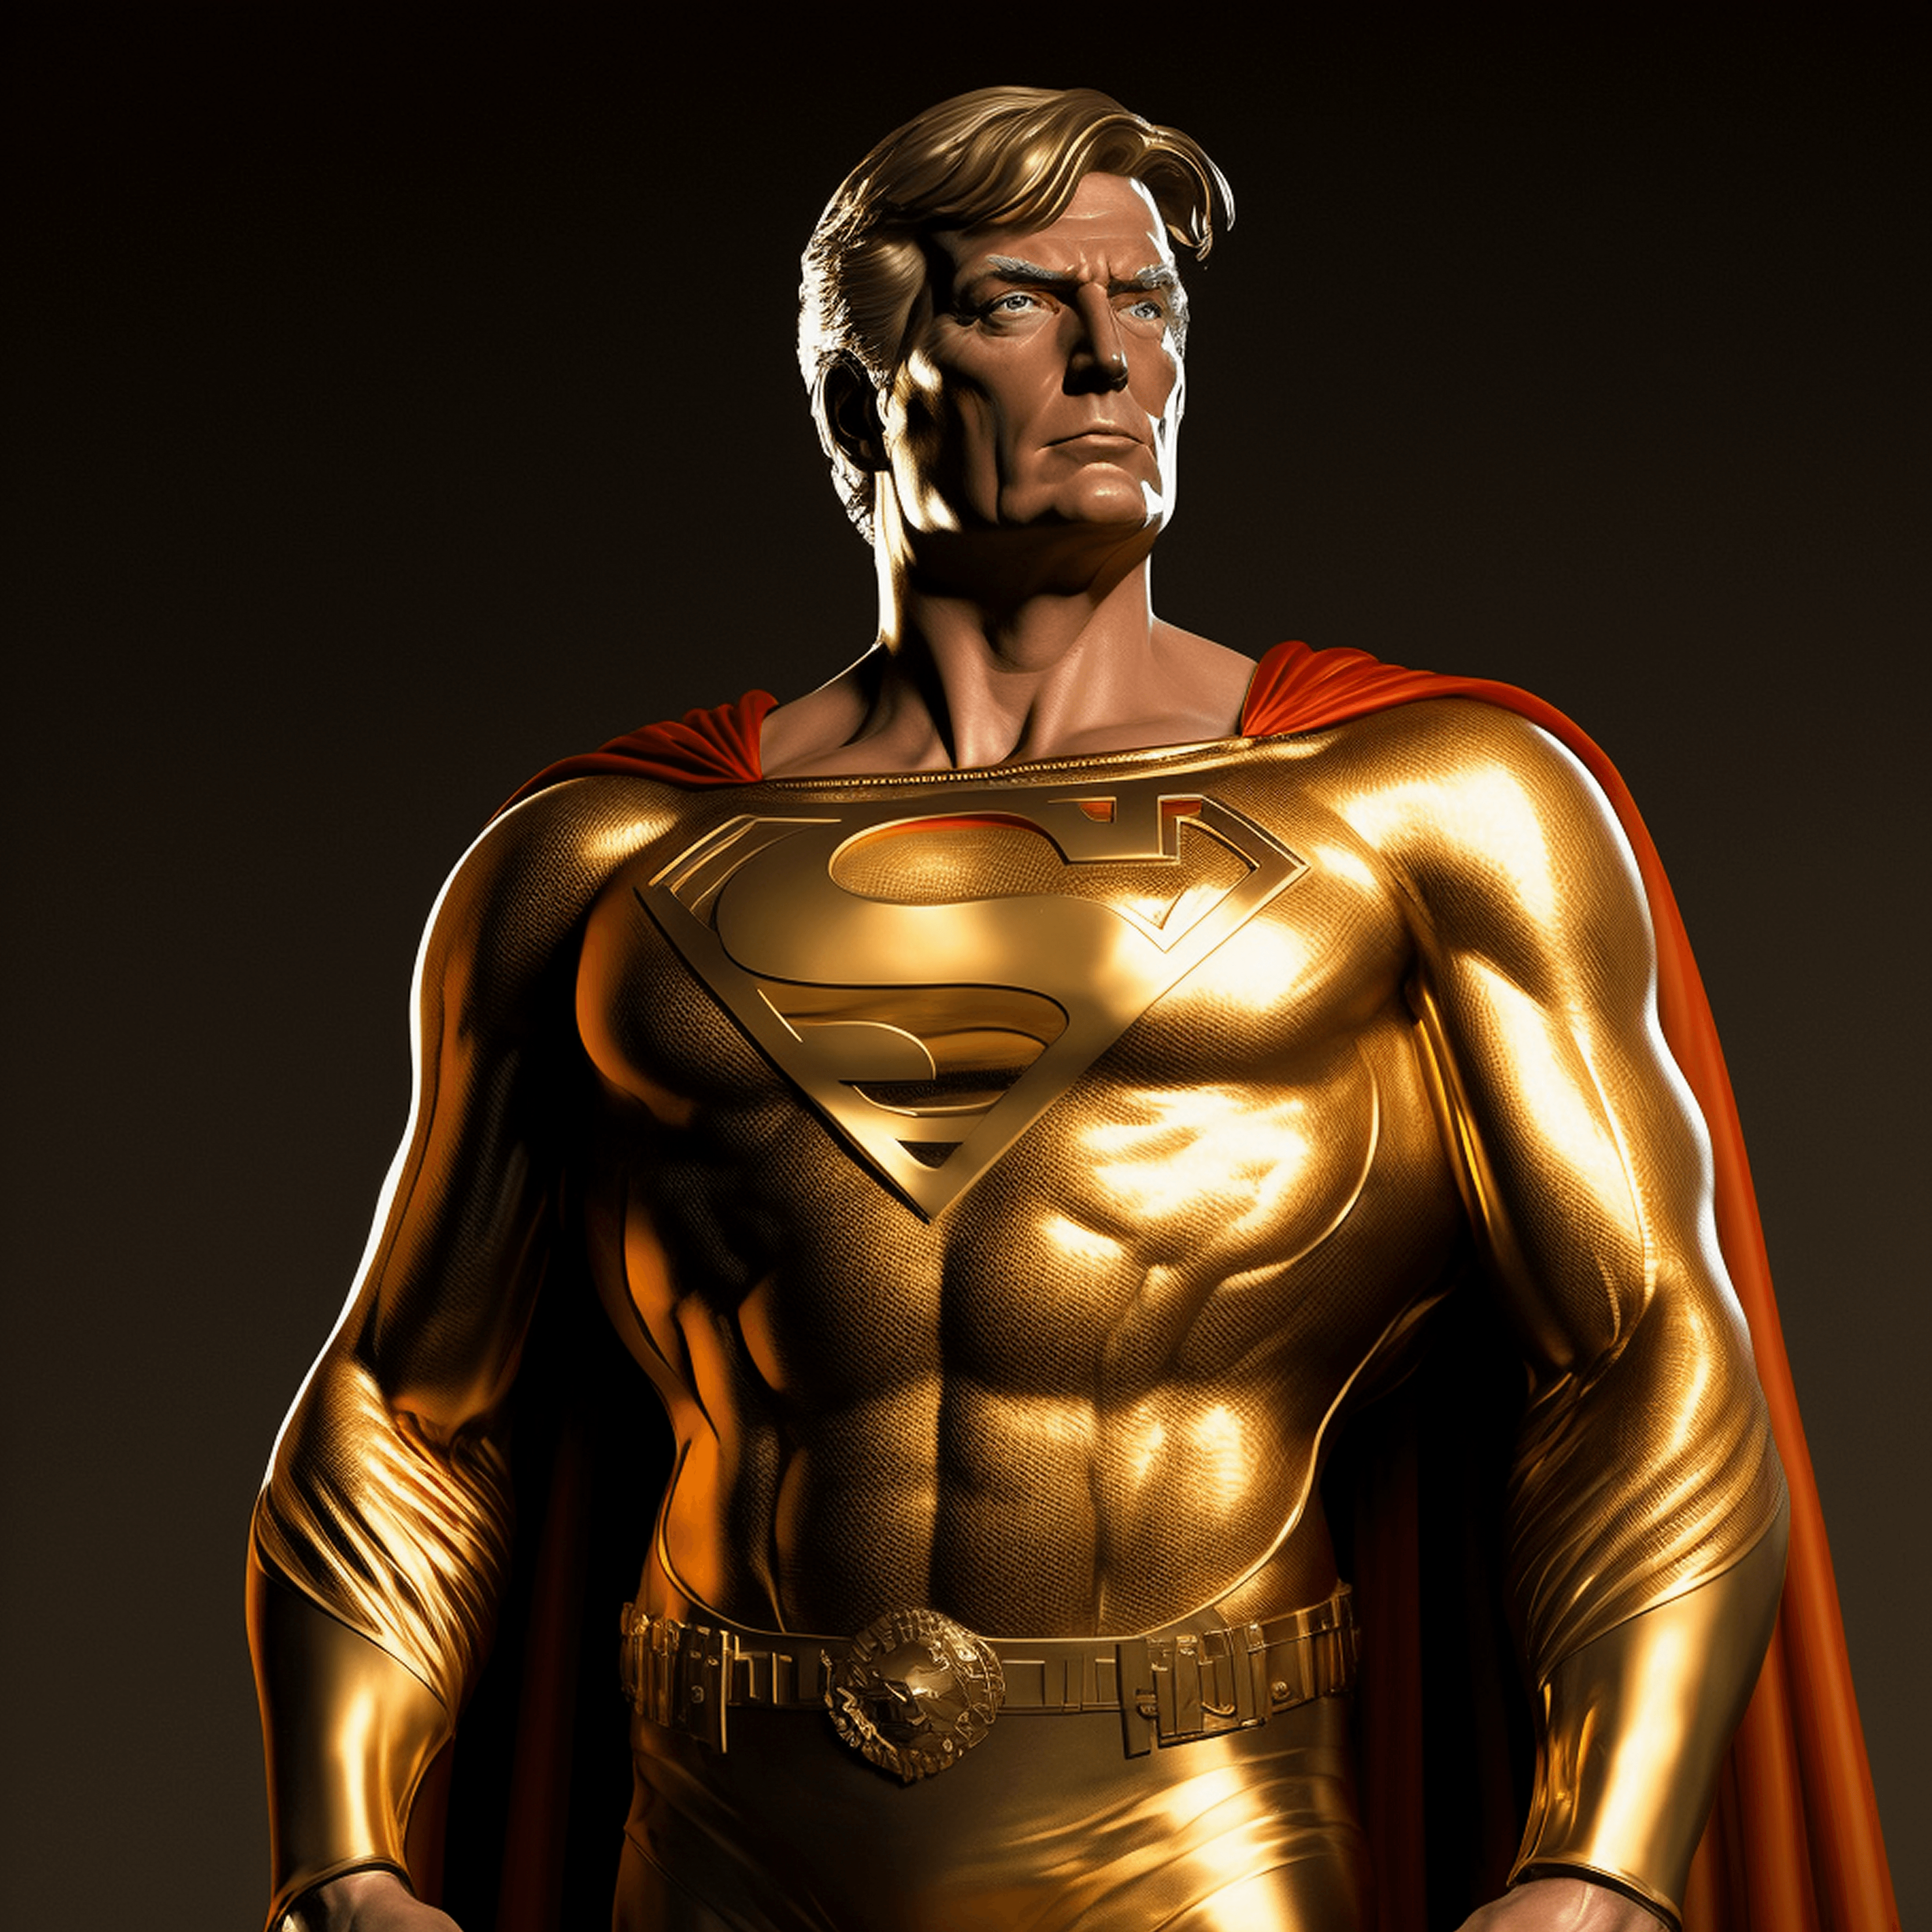 Superhero Gold No. 7 by Sollog